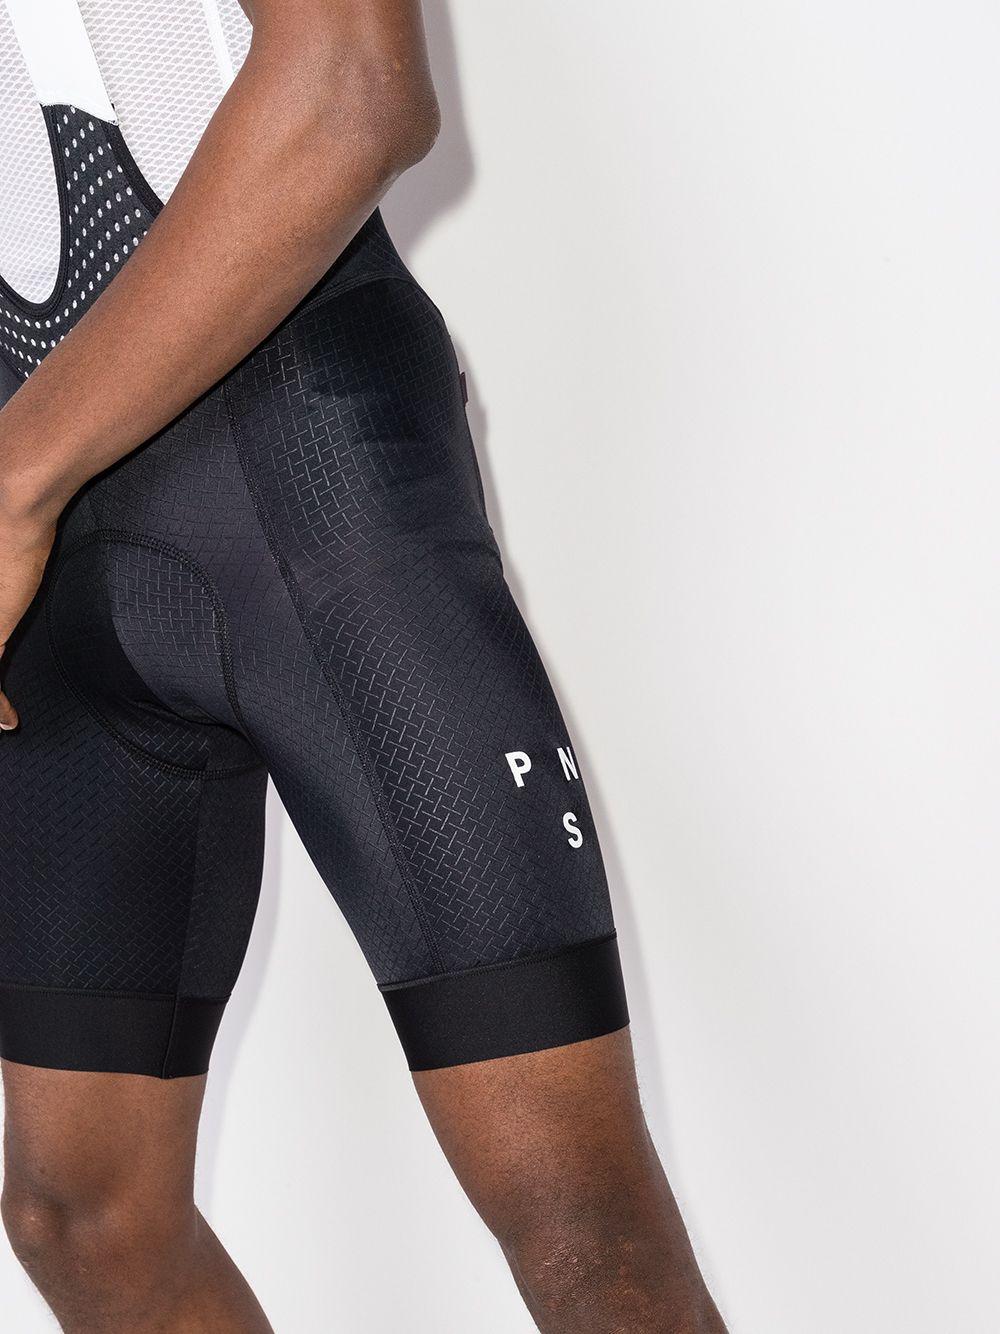 Pas Normal Studios Mechanism Bib Shorts in Black for Men | Lyst